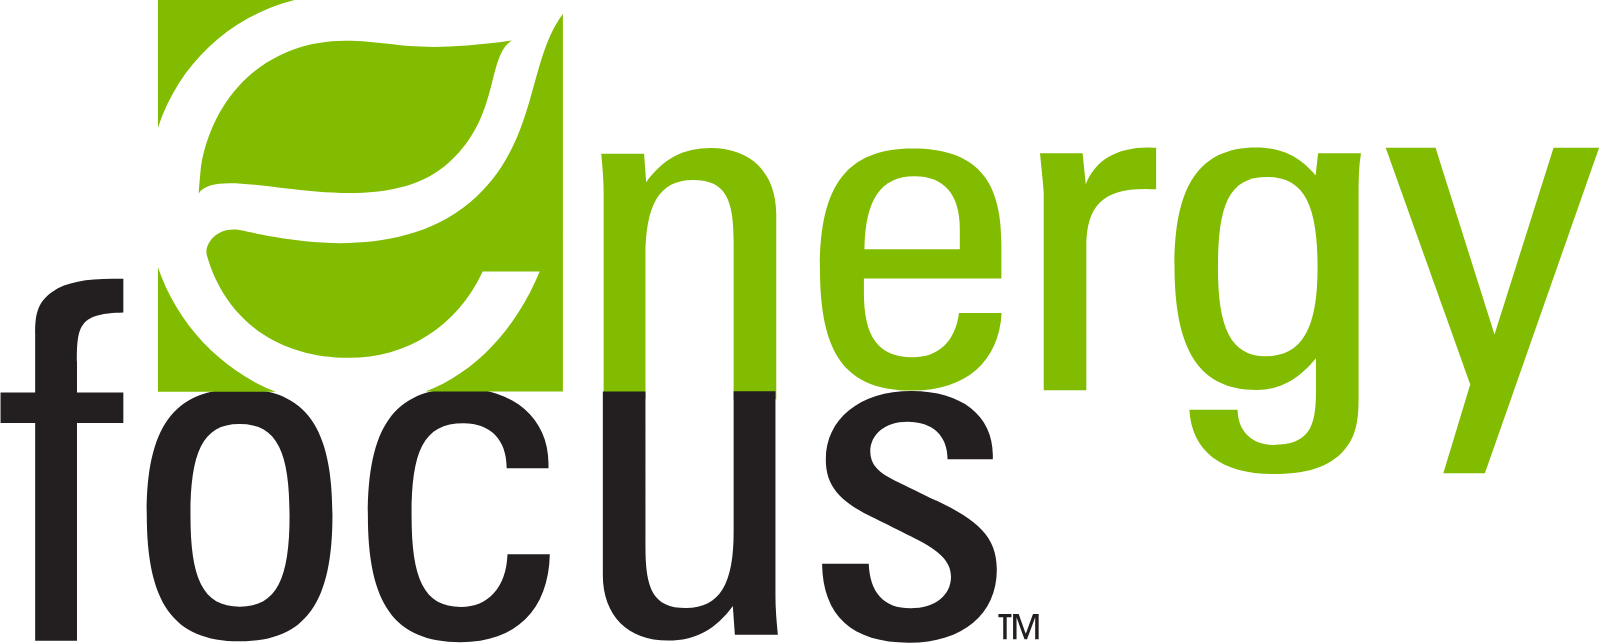 Energy Focus logo large (transparent PNG)